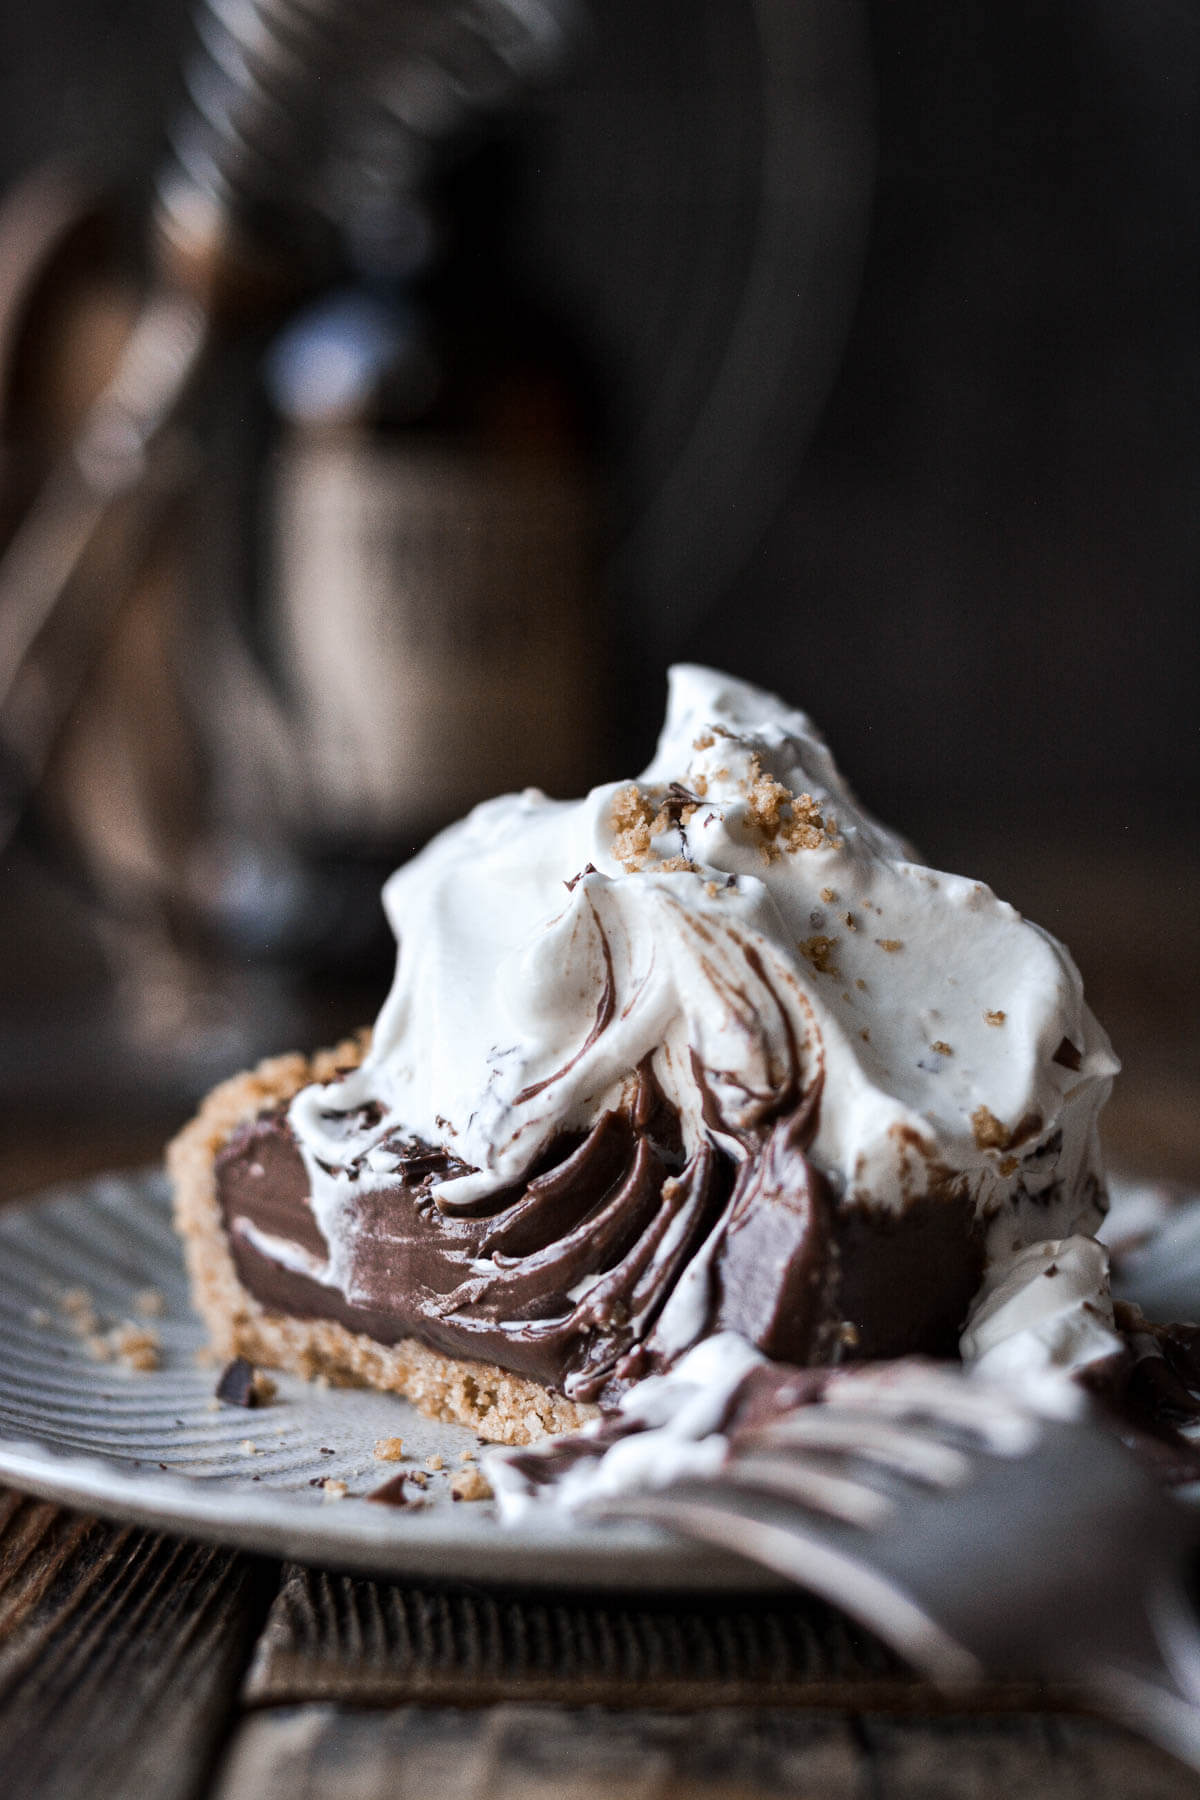 Chocolate cream pie with whipped cream.